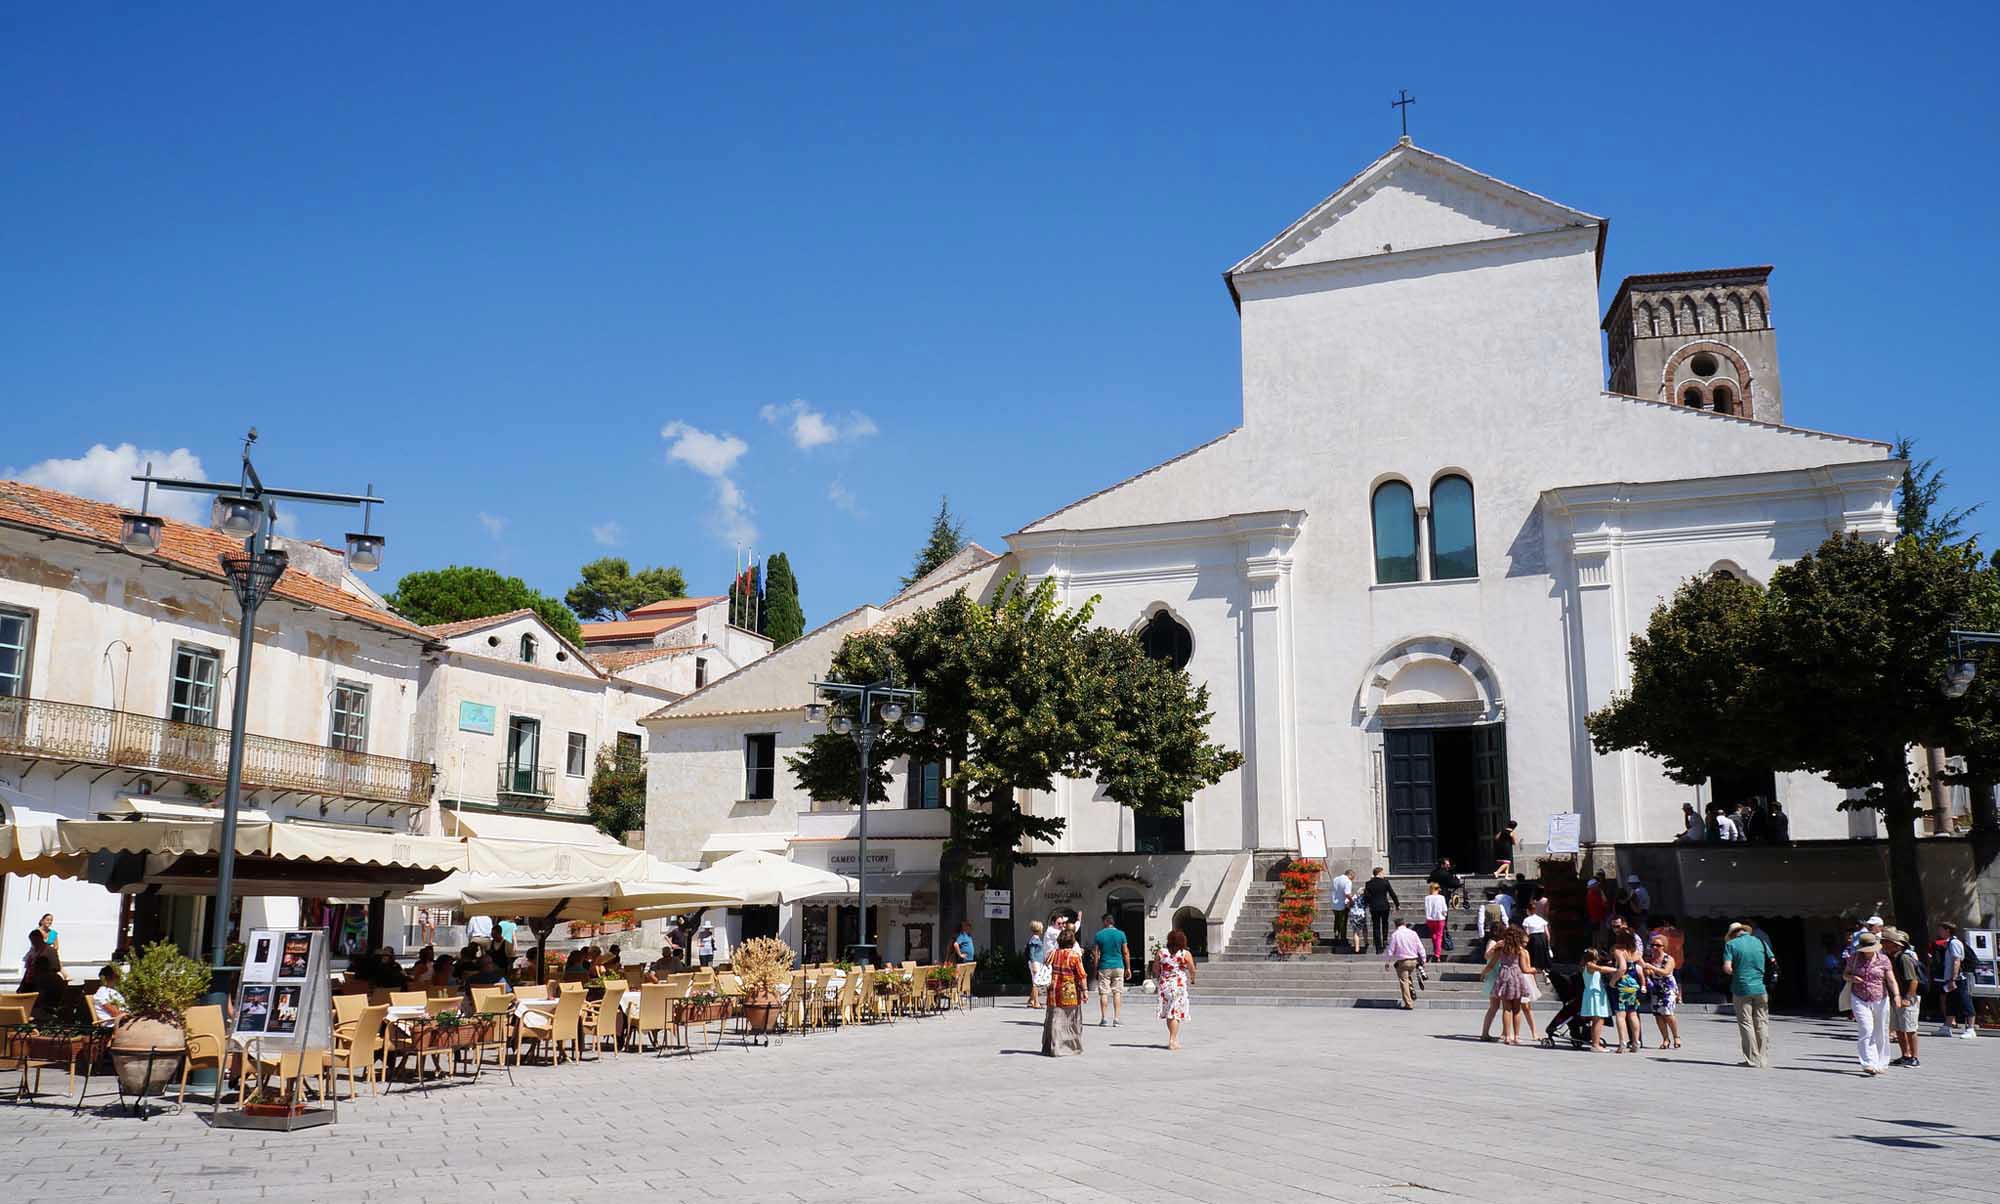 The town of Amalfi, Italy, centerpiece of the famed Amalfi Coast. 